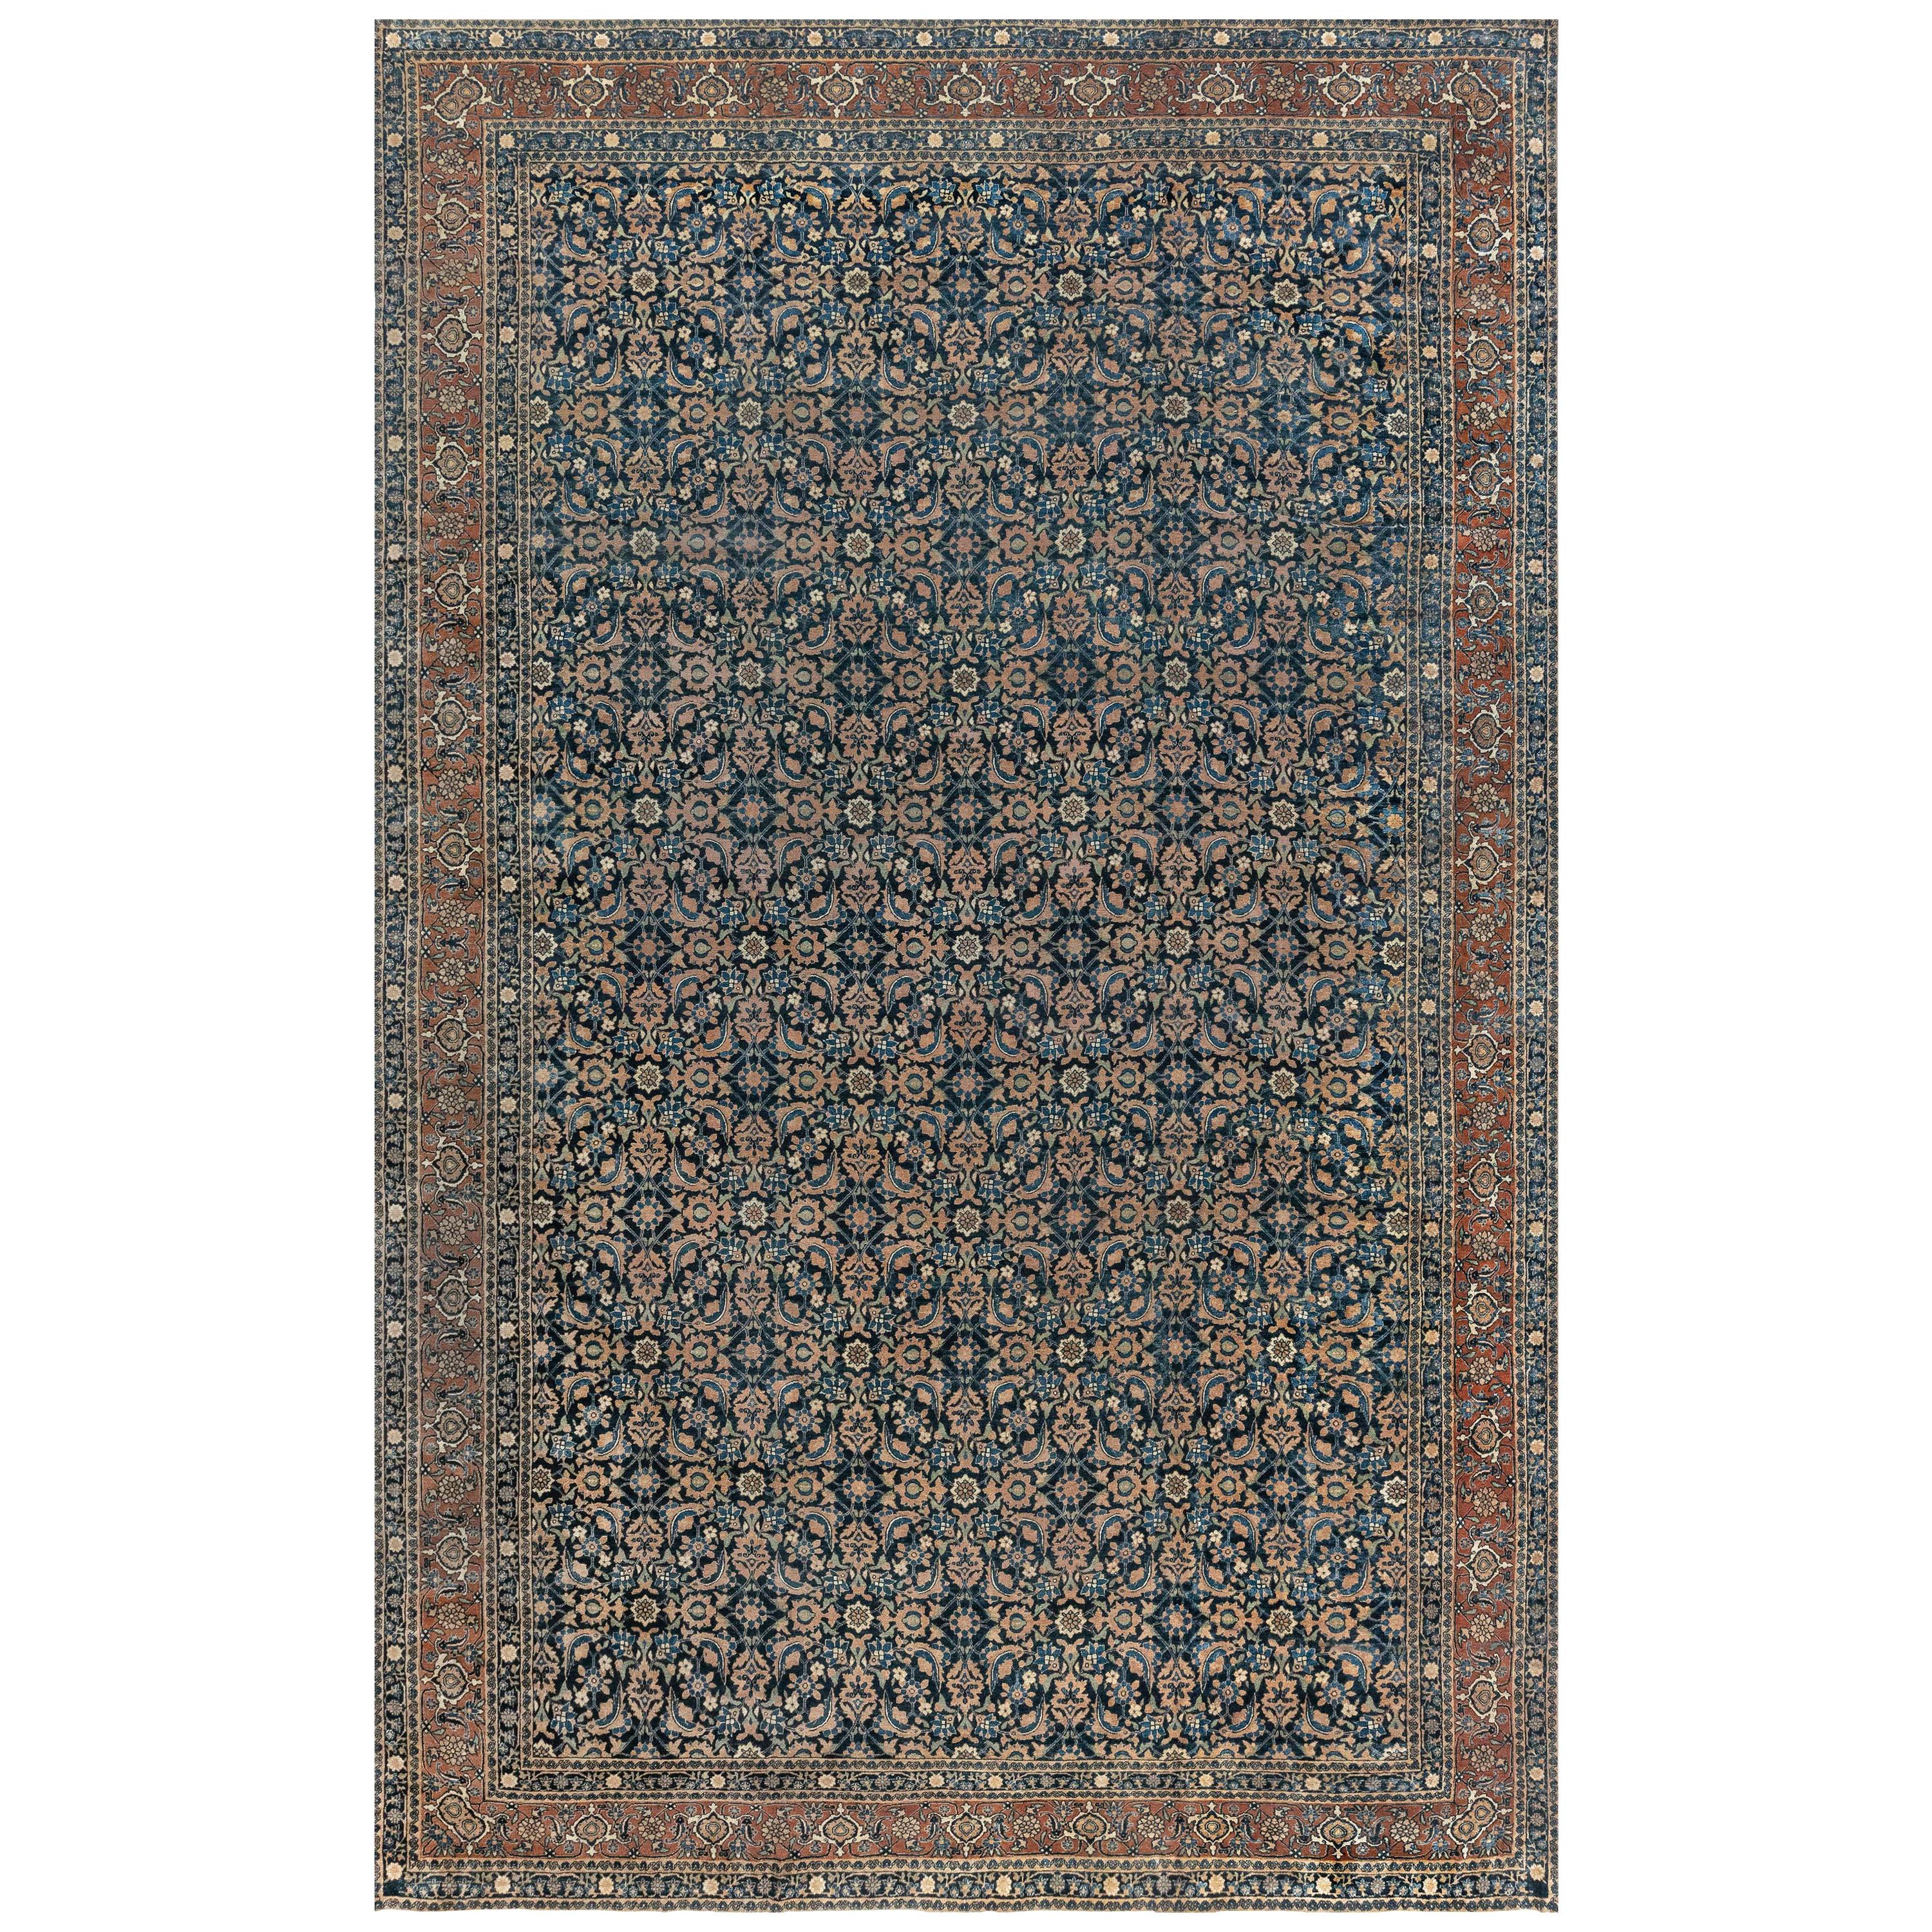 Early 20th Century Persian Tabriz Botanic Blue Handmade Wool Rug